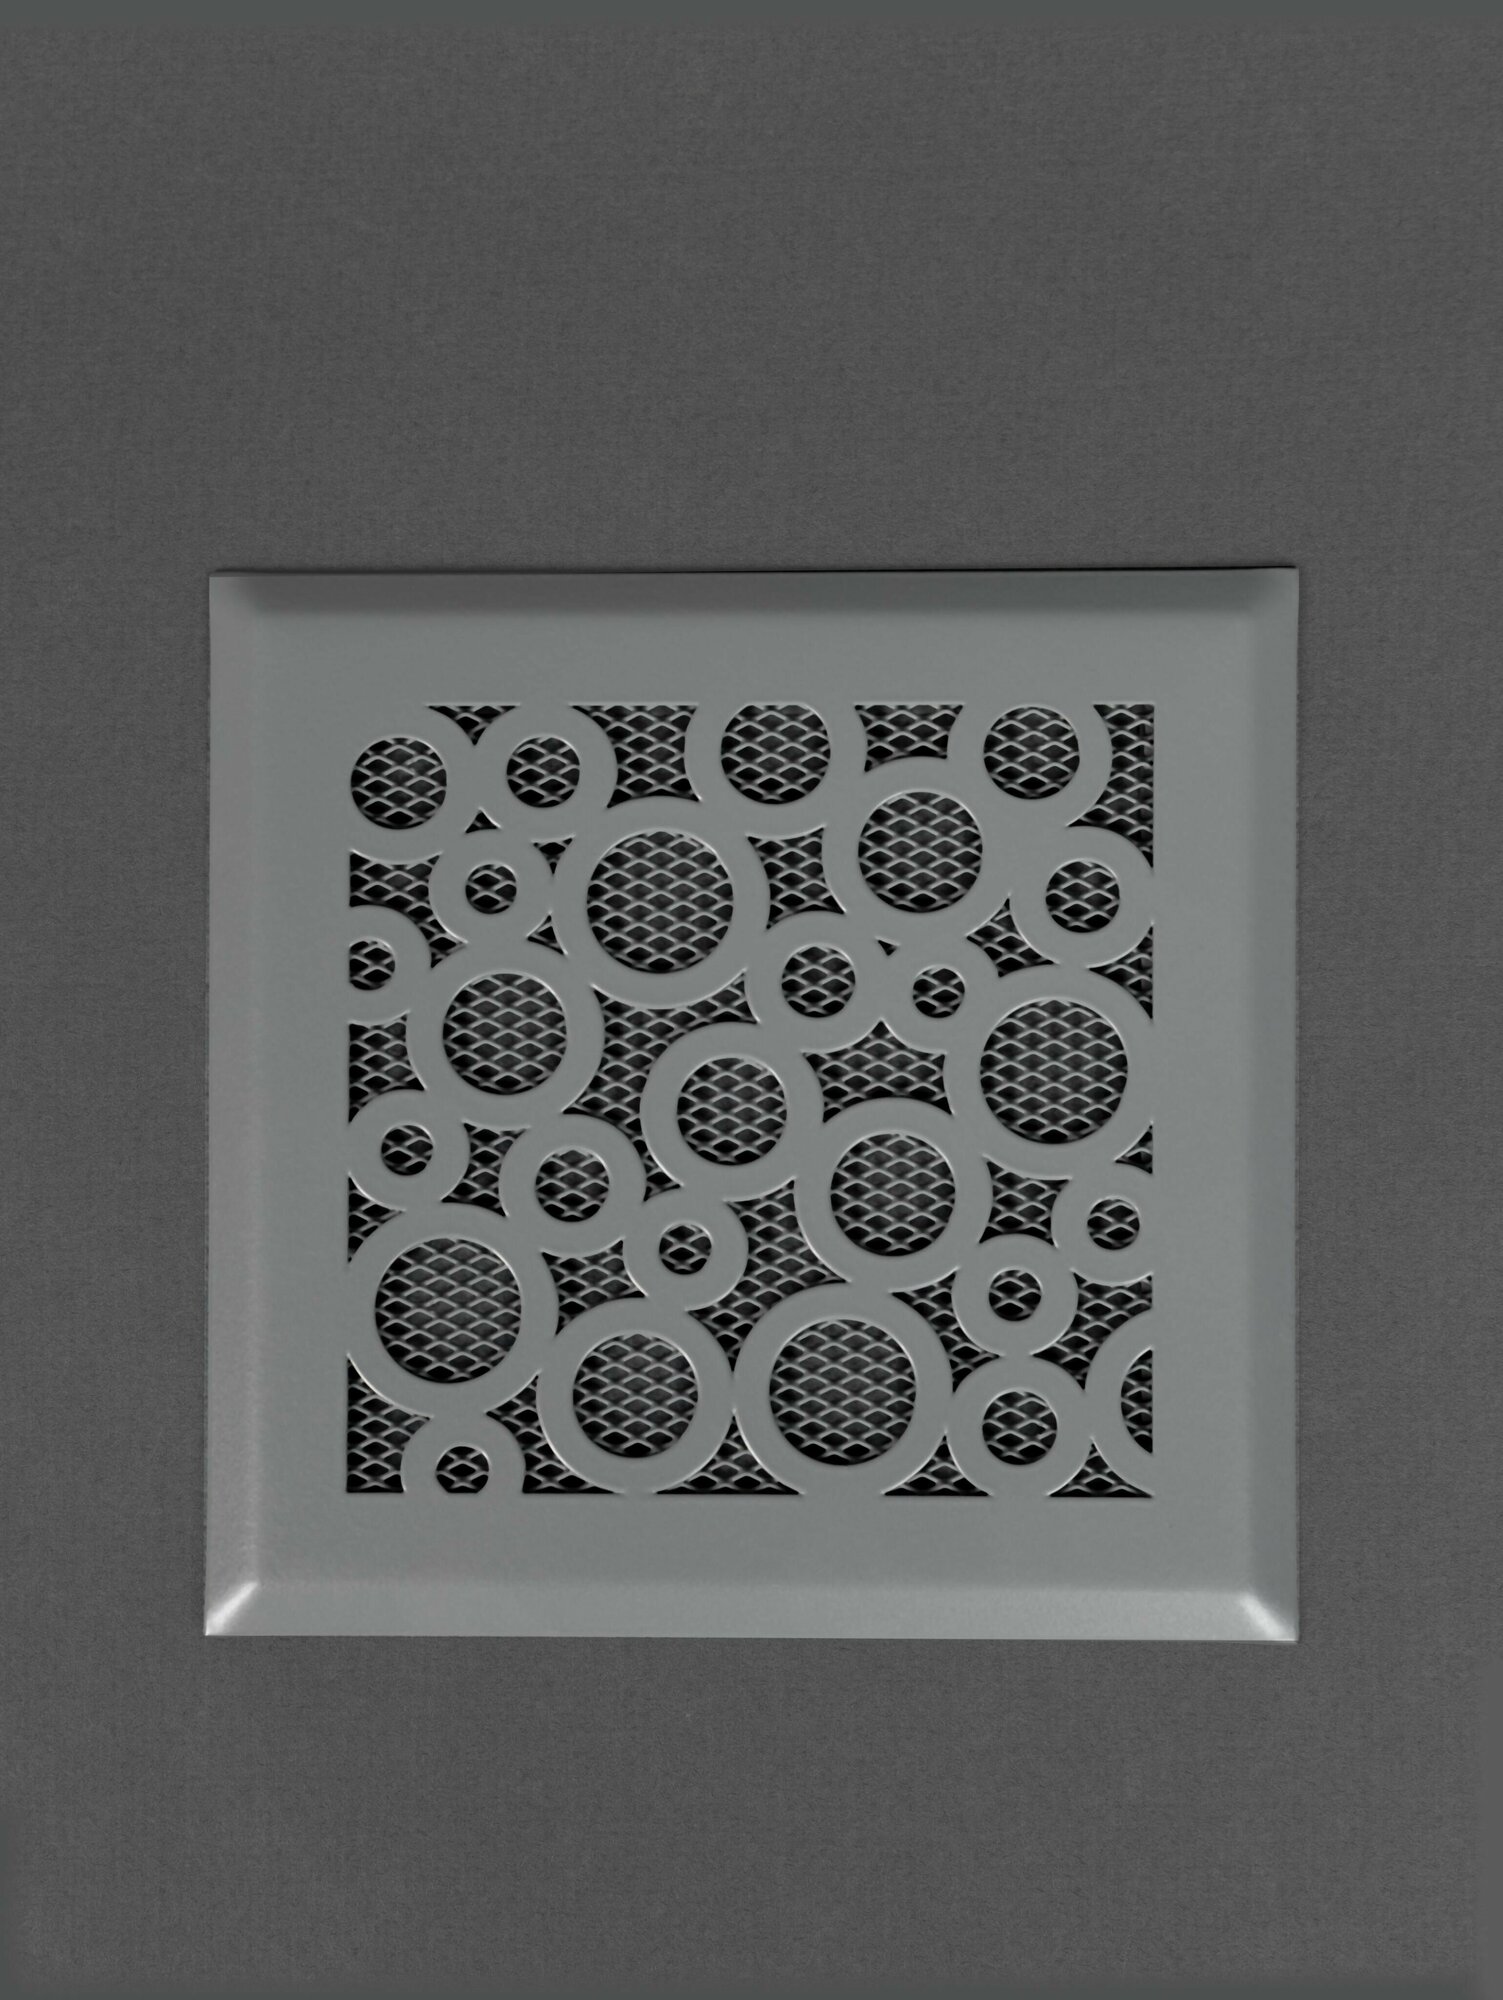 Решетка вентиляционная на магнитах 150x150 мм. съемная (РП150 кольцо) металлическая от производителя Родфер - фотография № 6